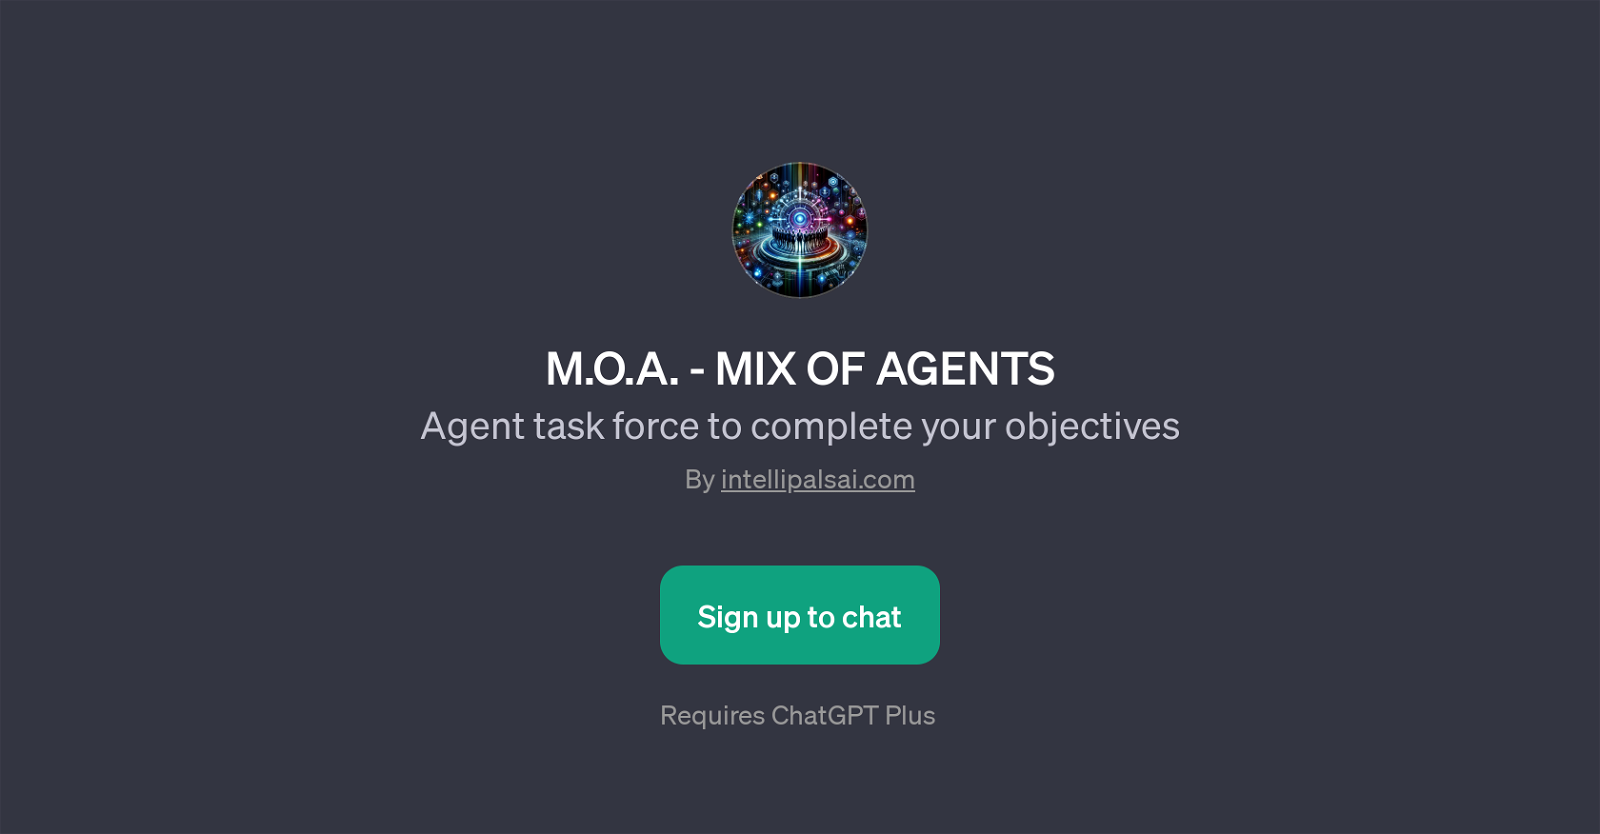 M.O.A. - MIX OF AGENTS website